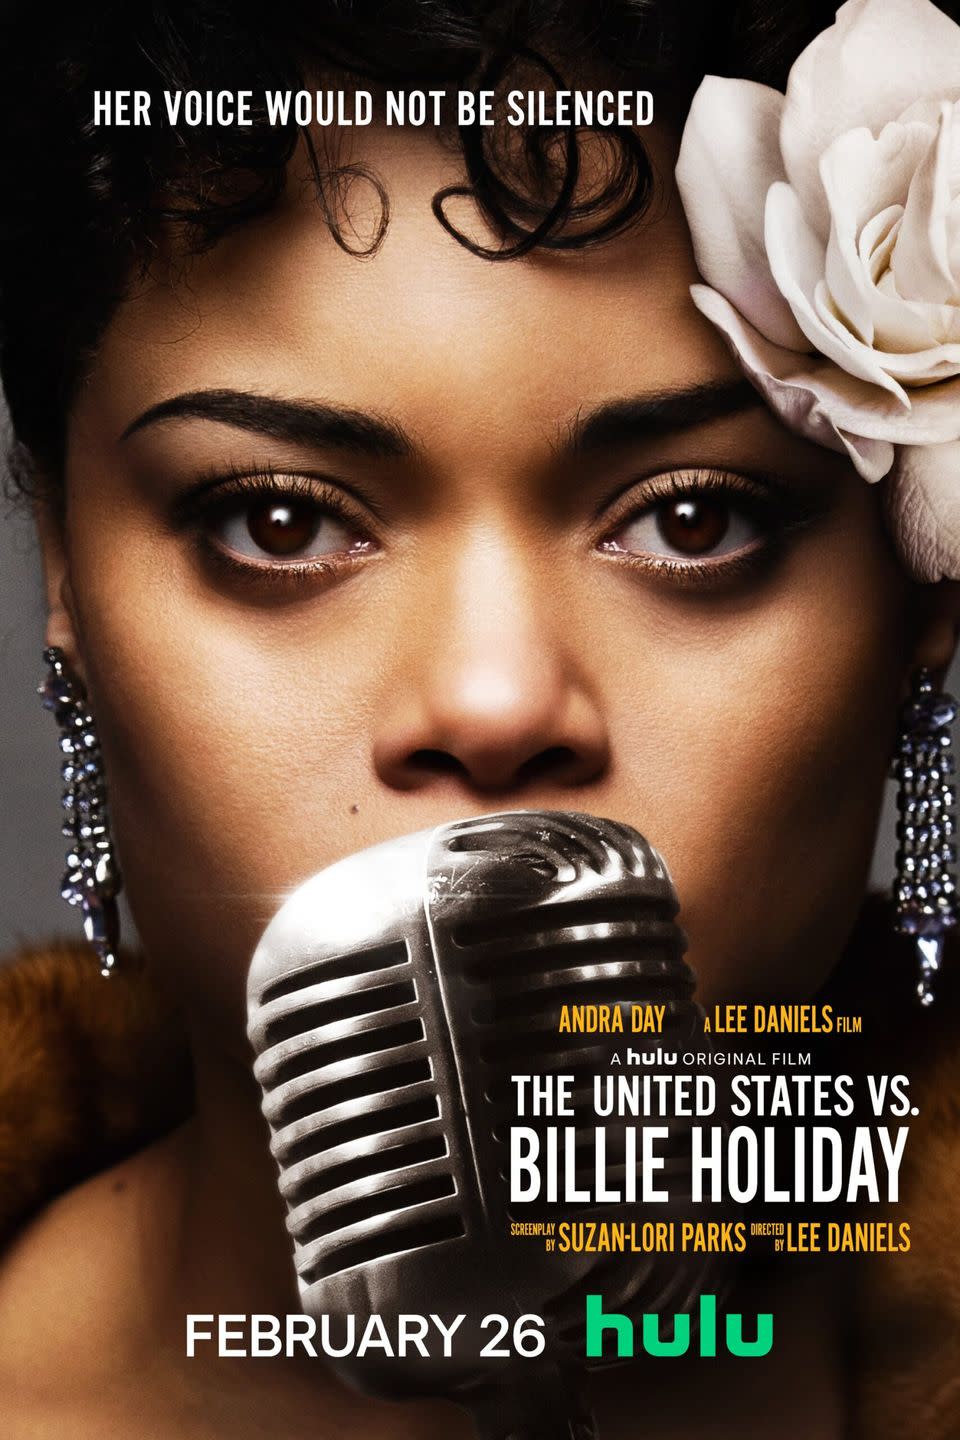 10) The United States Vs. Billie Holiday